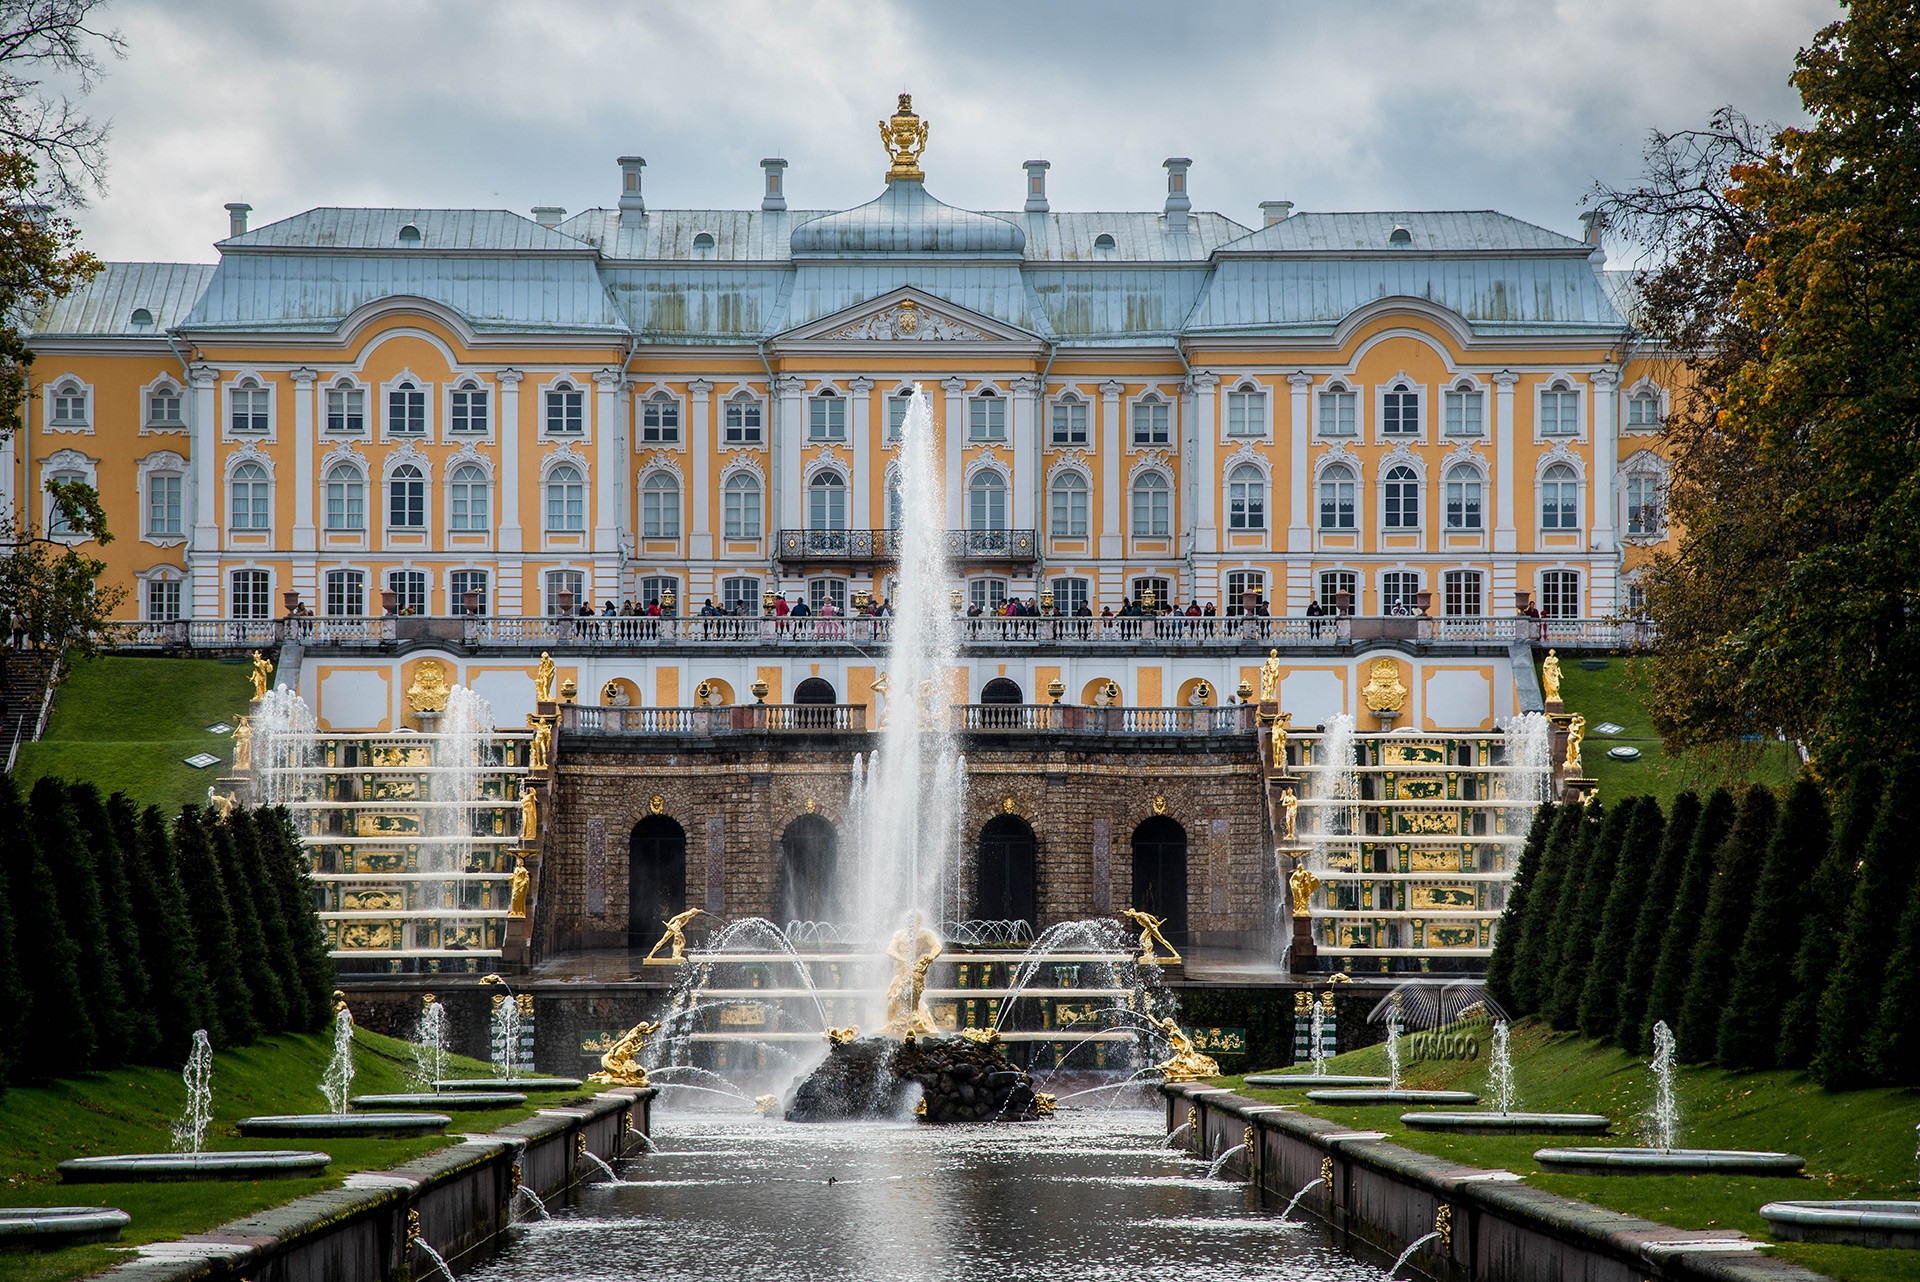 St. Petersburg Peterhof Palace